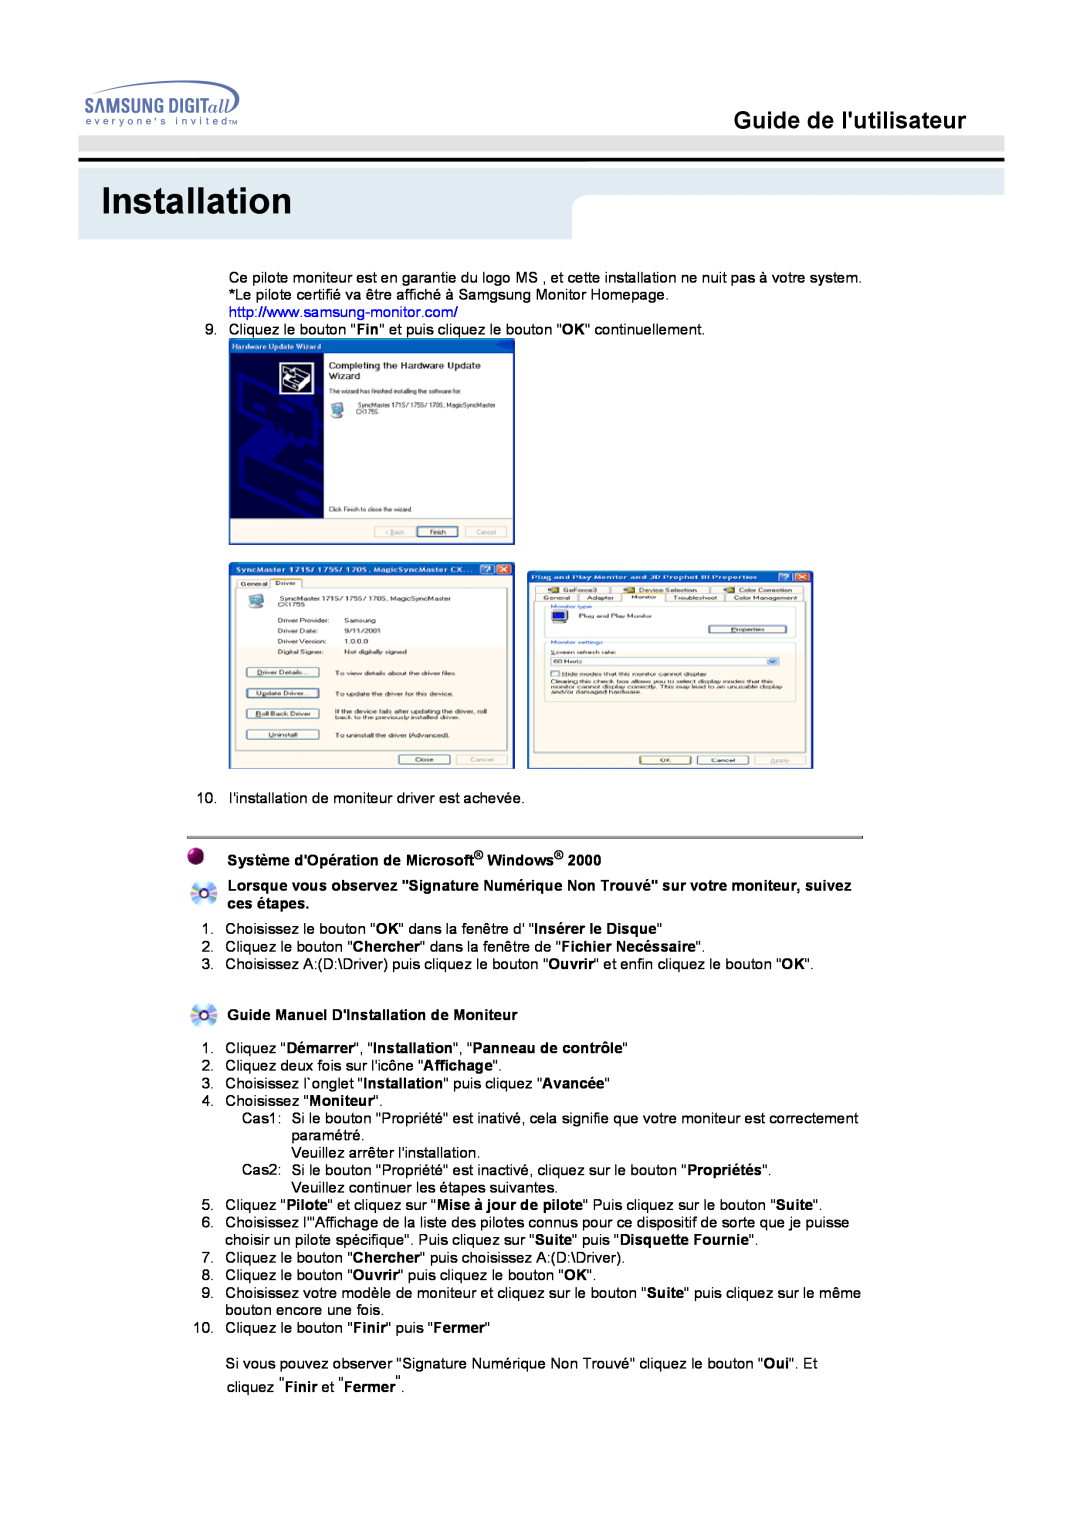 Samsung GH15MSAN/EDC, GH15MSSS/EDC manual Installation, Guide de lutilisateur, Système dOpération de Microsoft Windows 